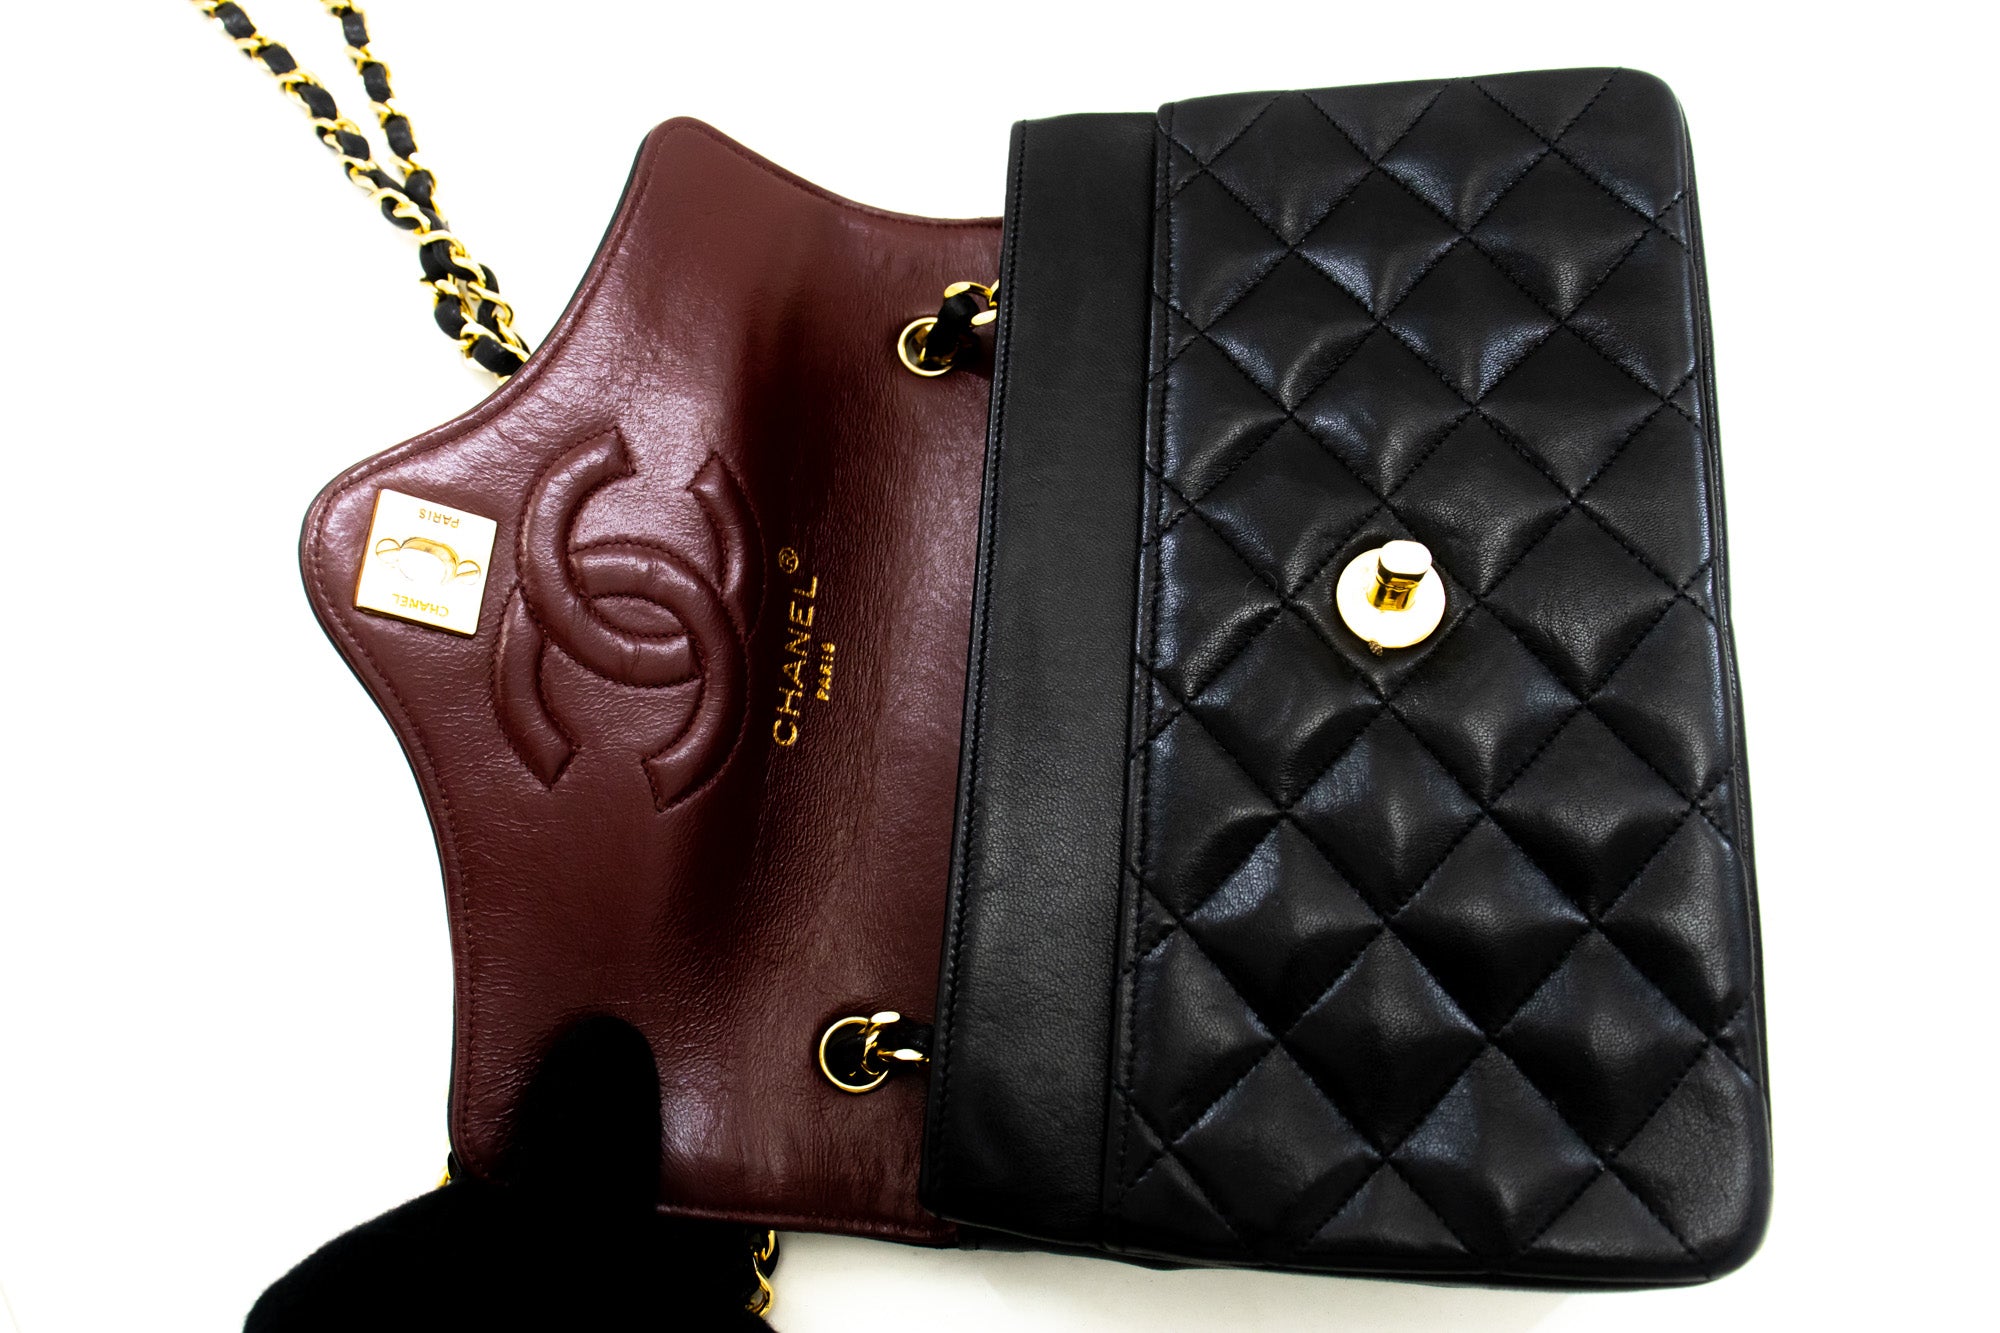 Pre-owned Chanel Double Flap Black Leather Shoulder Bag ()